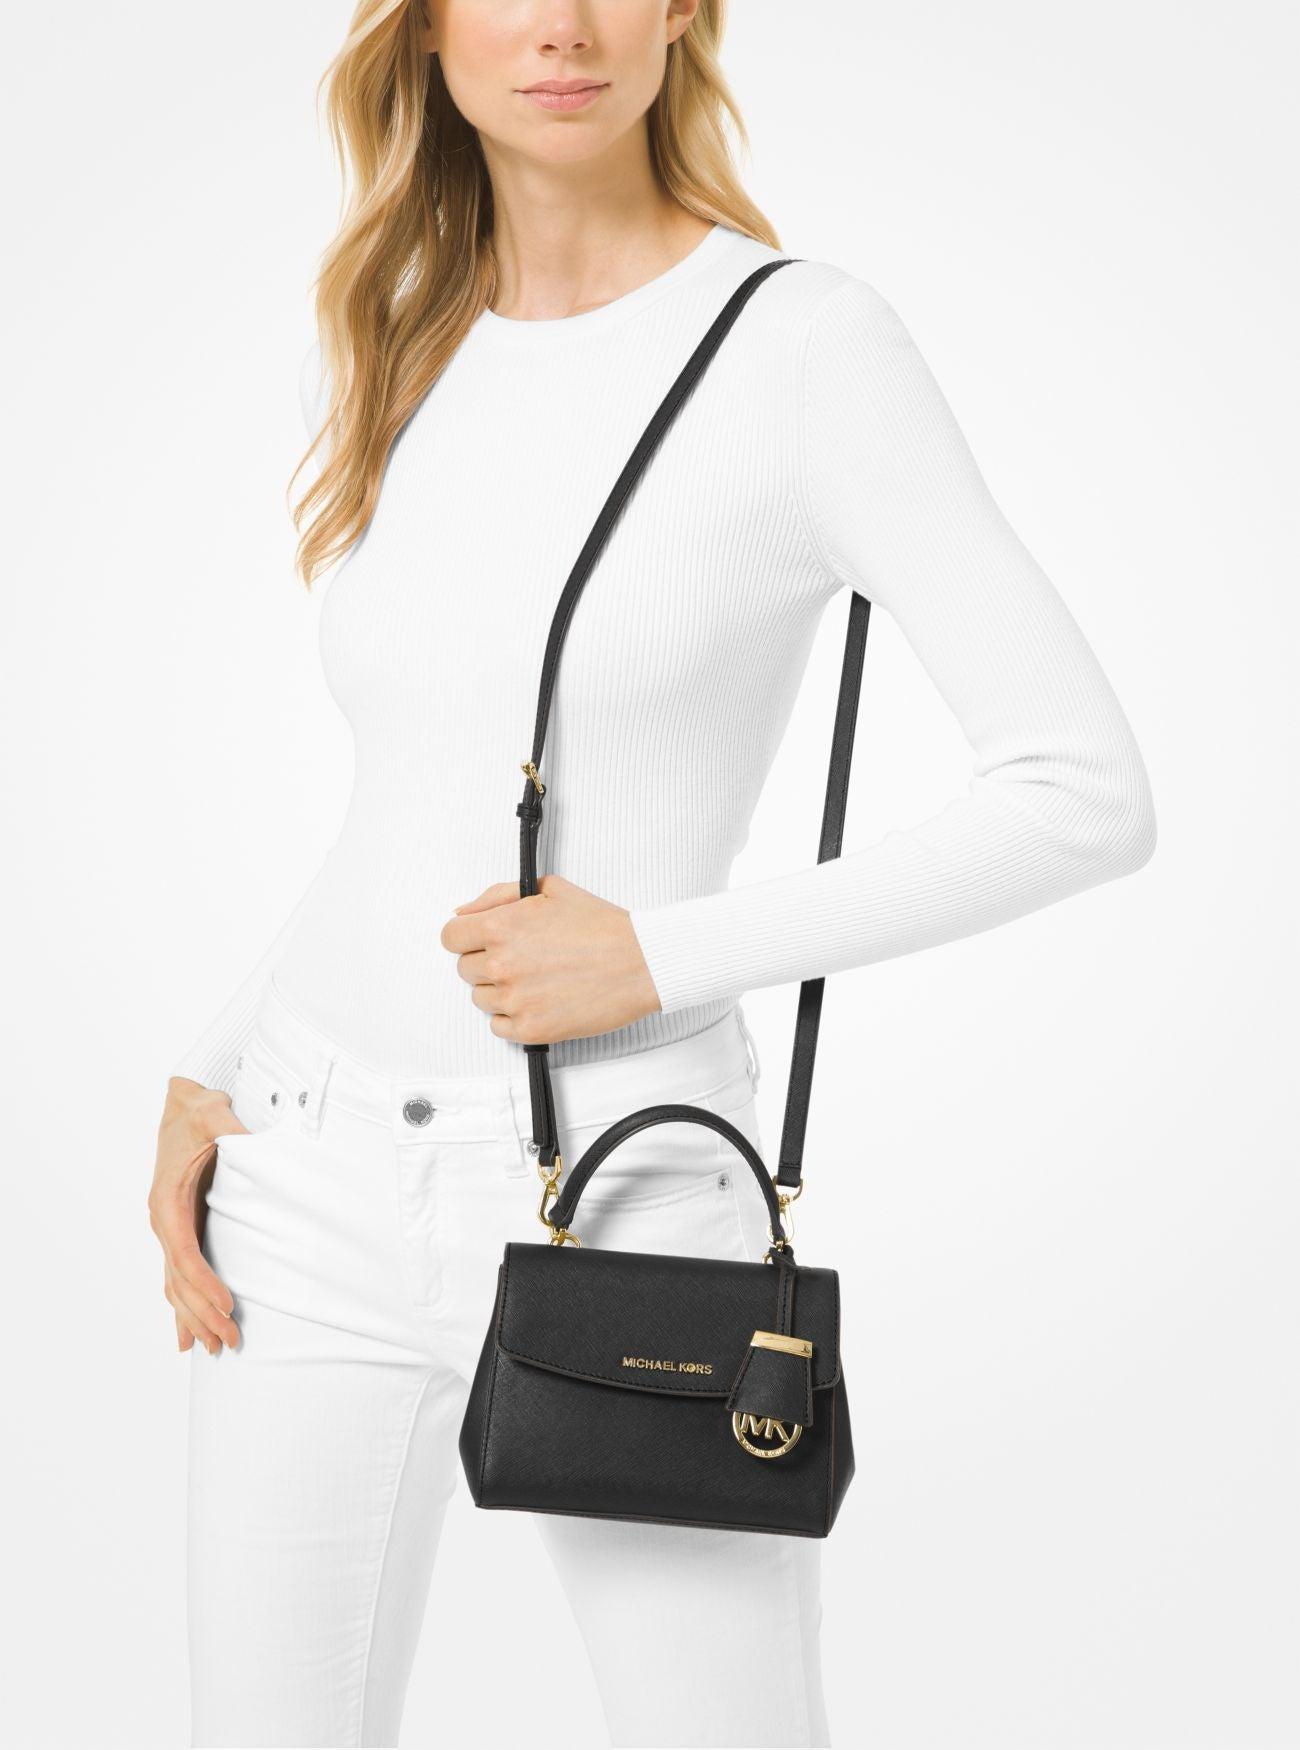 Michael Kors Ava Extra Small Crossbody Bag in Black